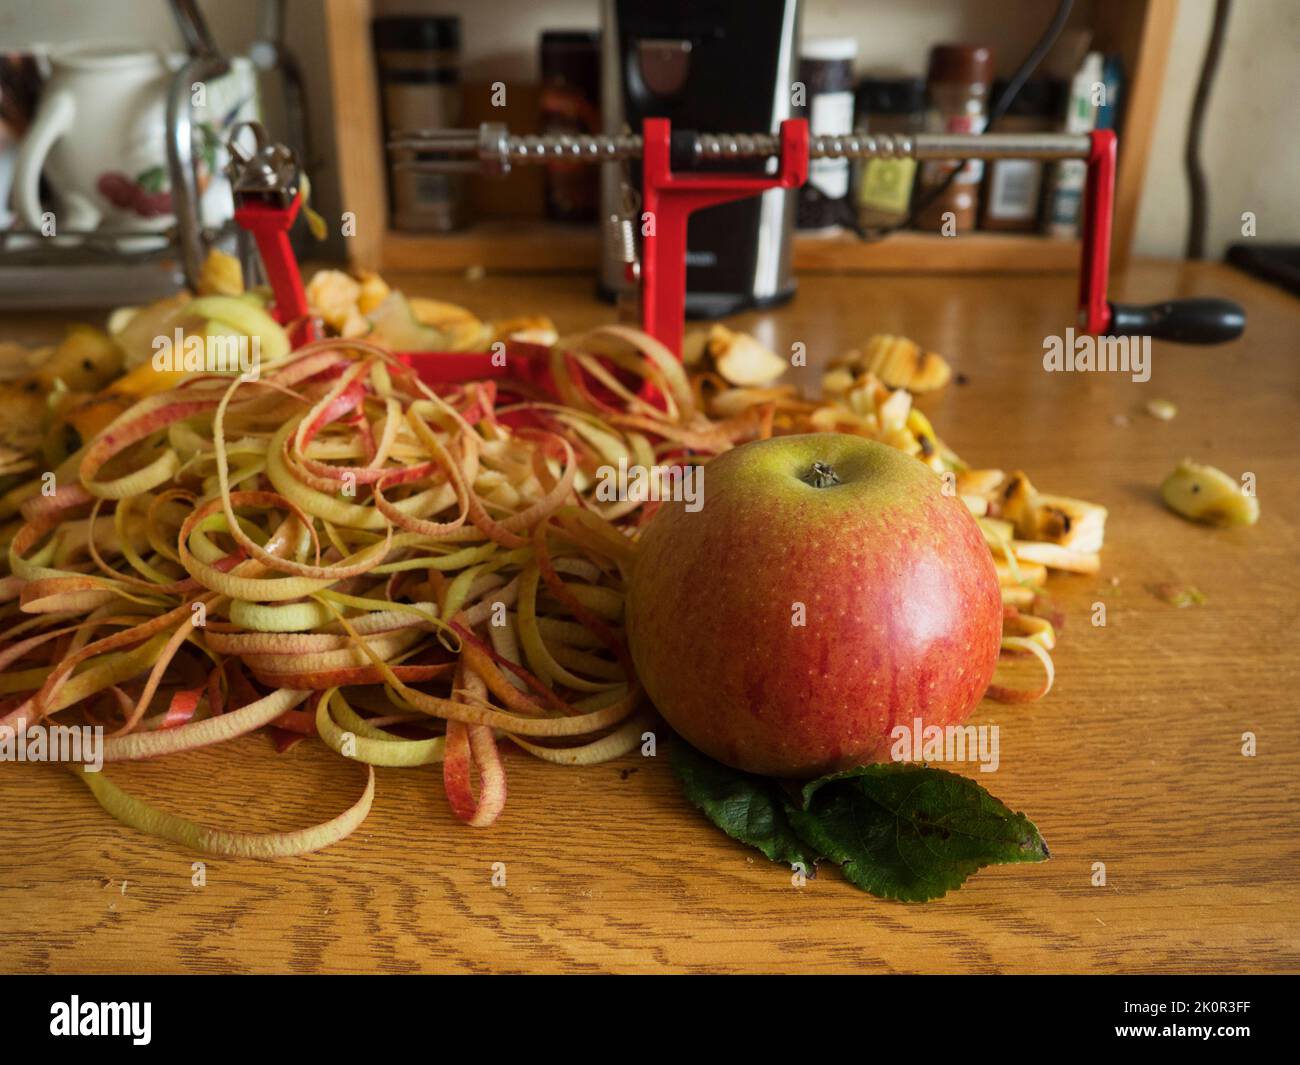 Peeling & coring apples. Stock Photo